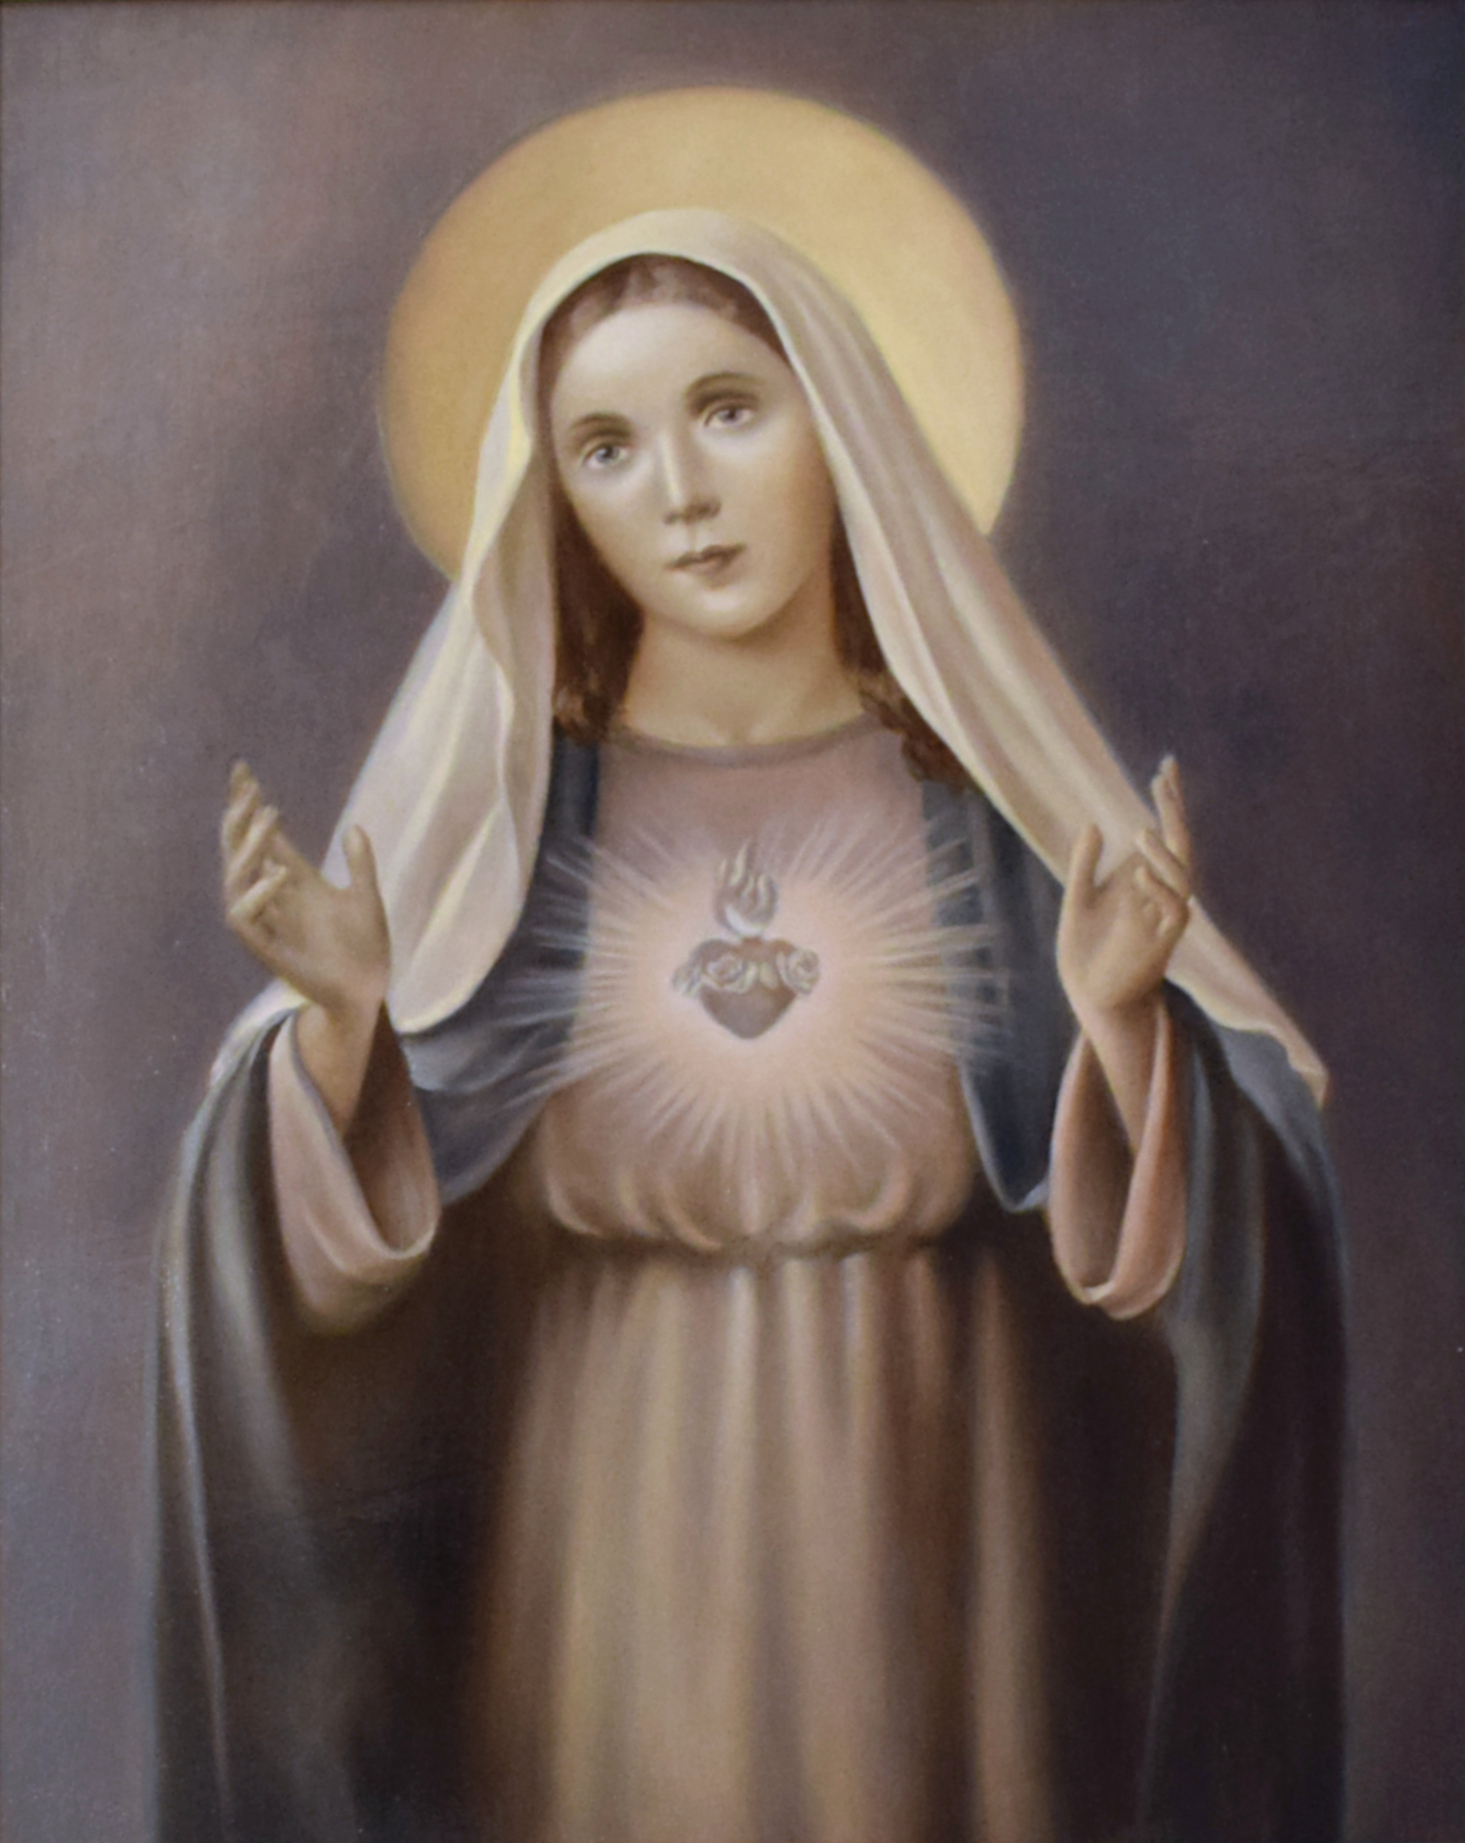 Version of a religious icon by unknown author, Imaculado Coração de Maria, oil on canvas, 50 x 40 cm, 2020